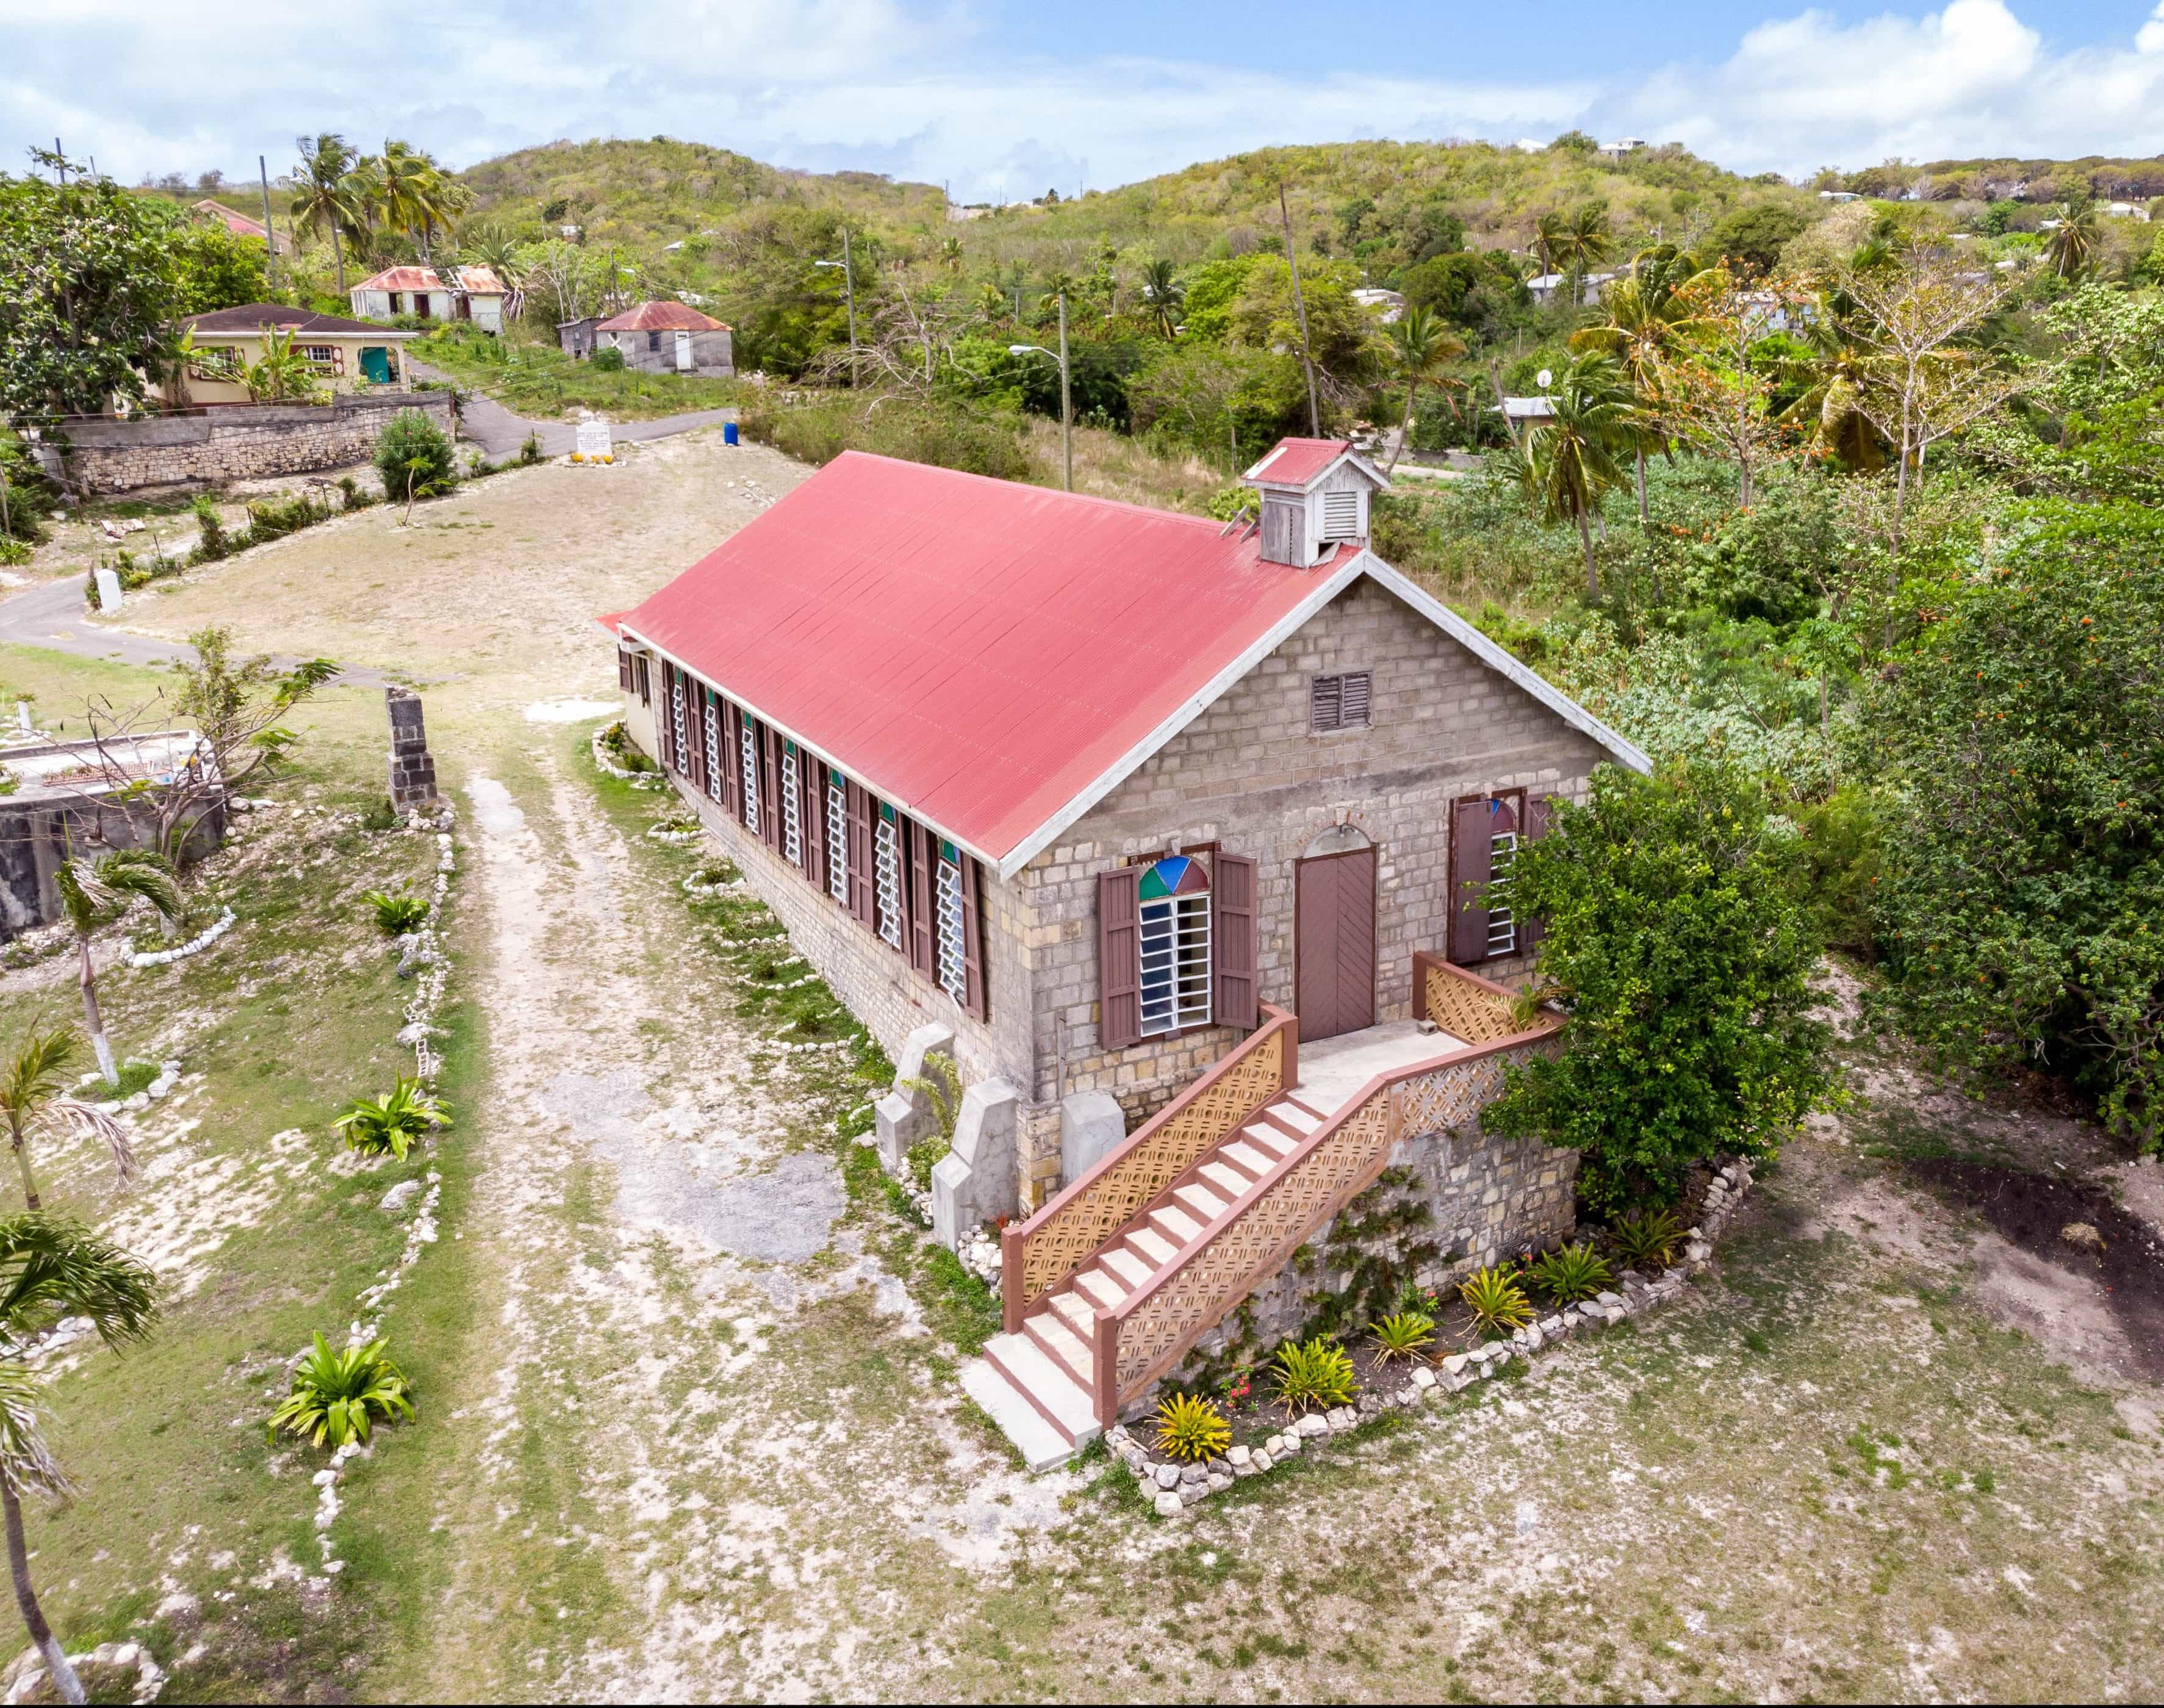 Enon Moravian, Churches of Antigua | Credit: Patrick Bennett